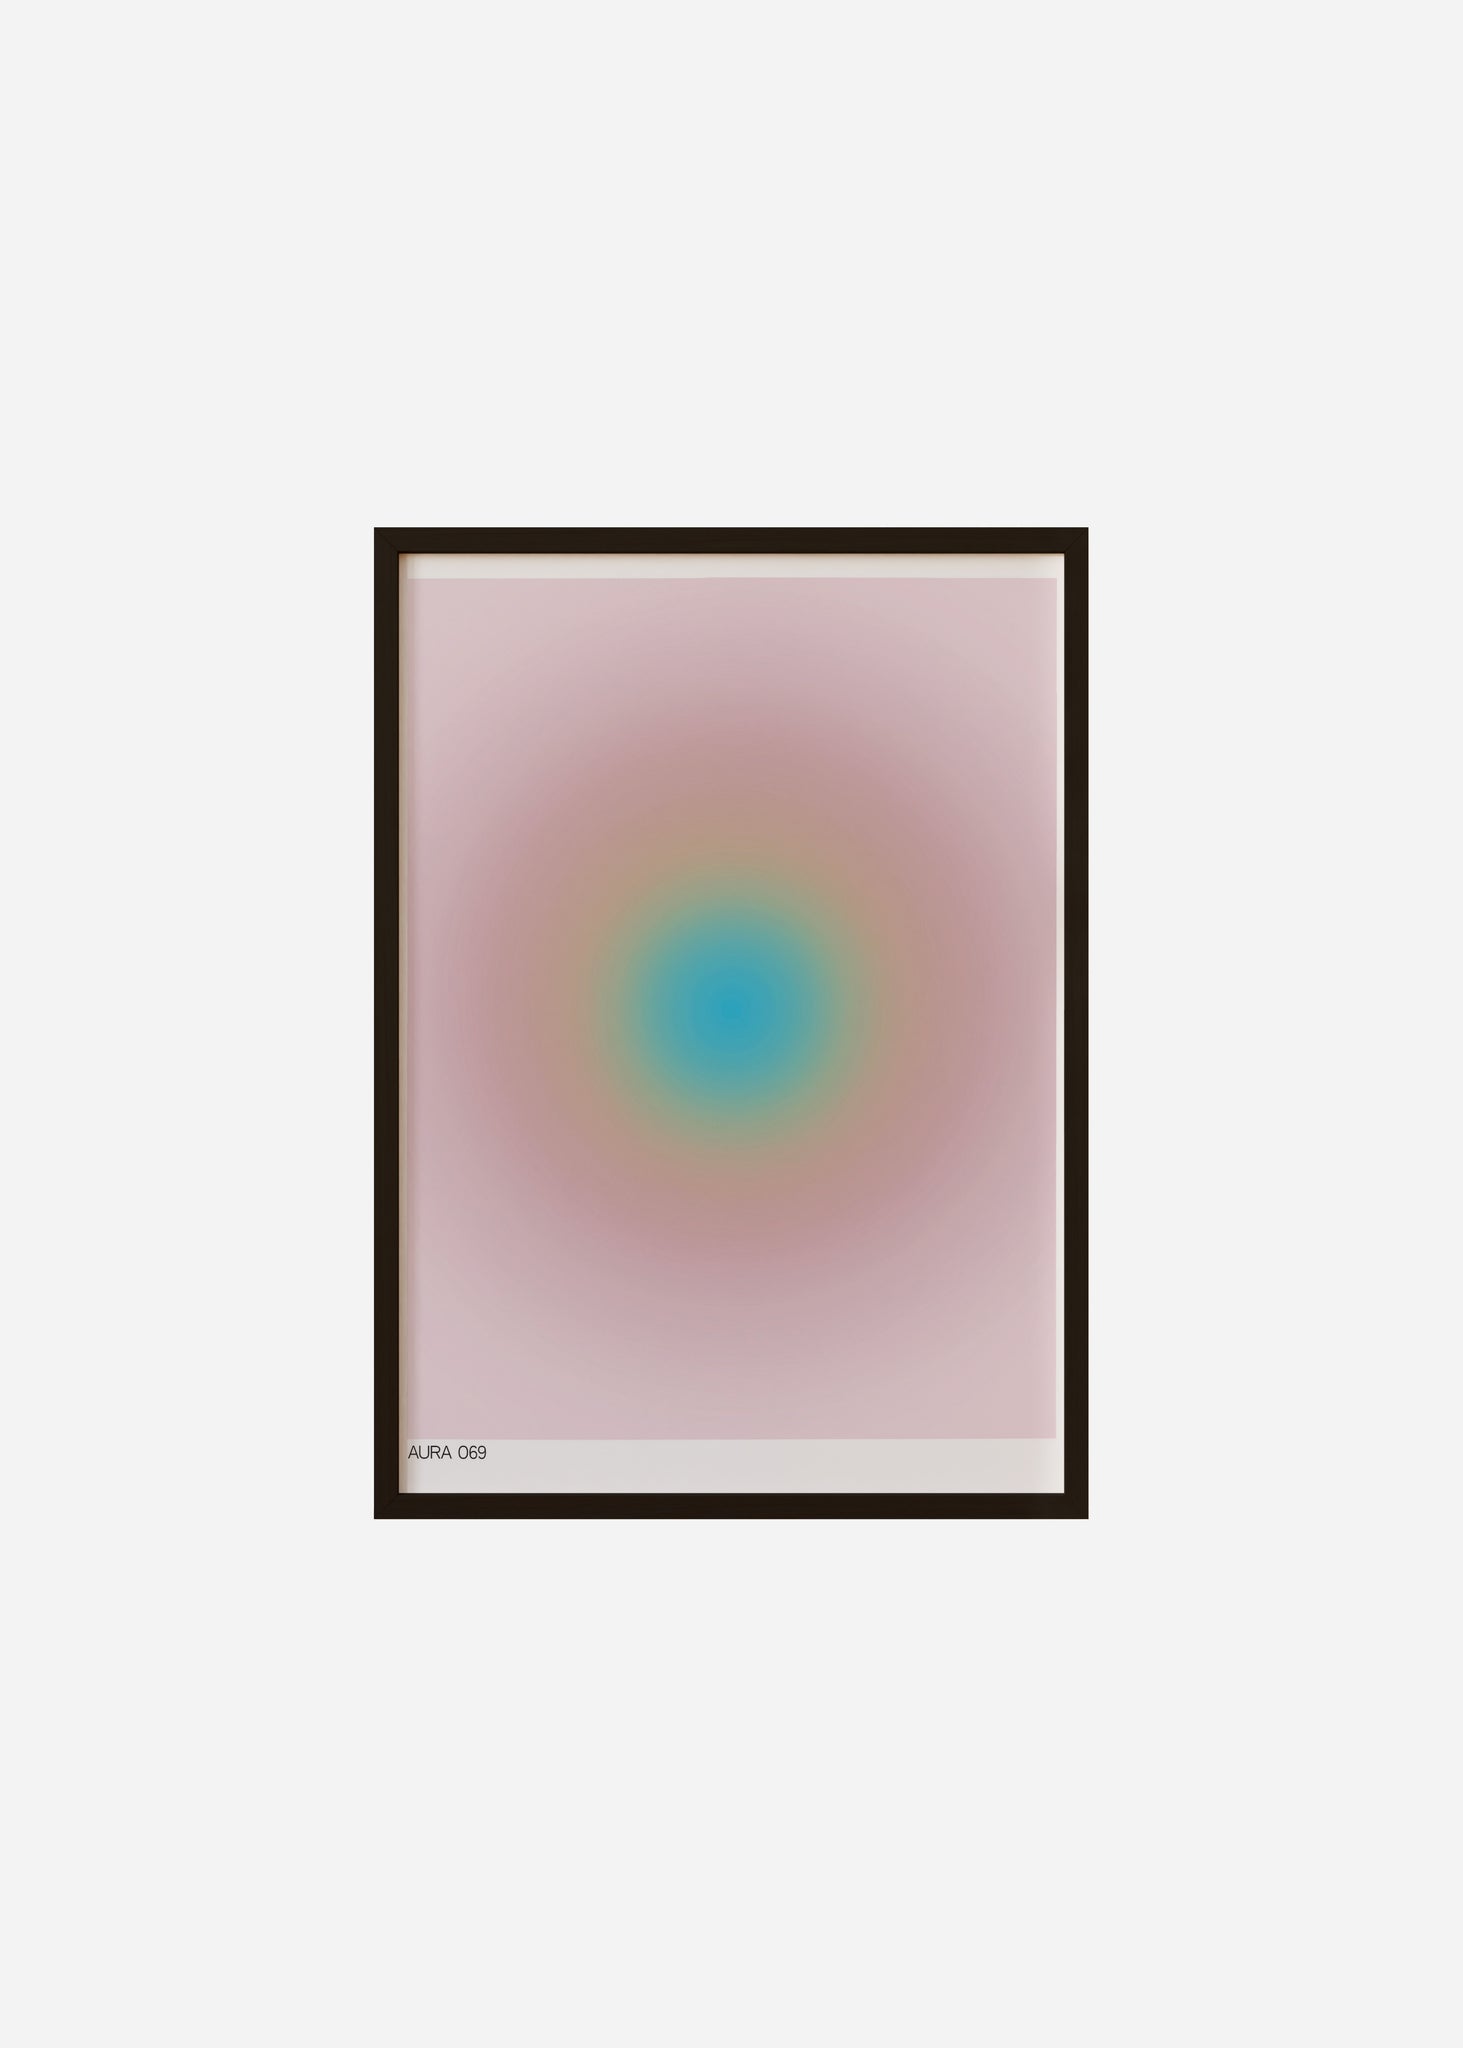 aura 069 Framed Print